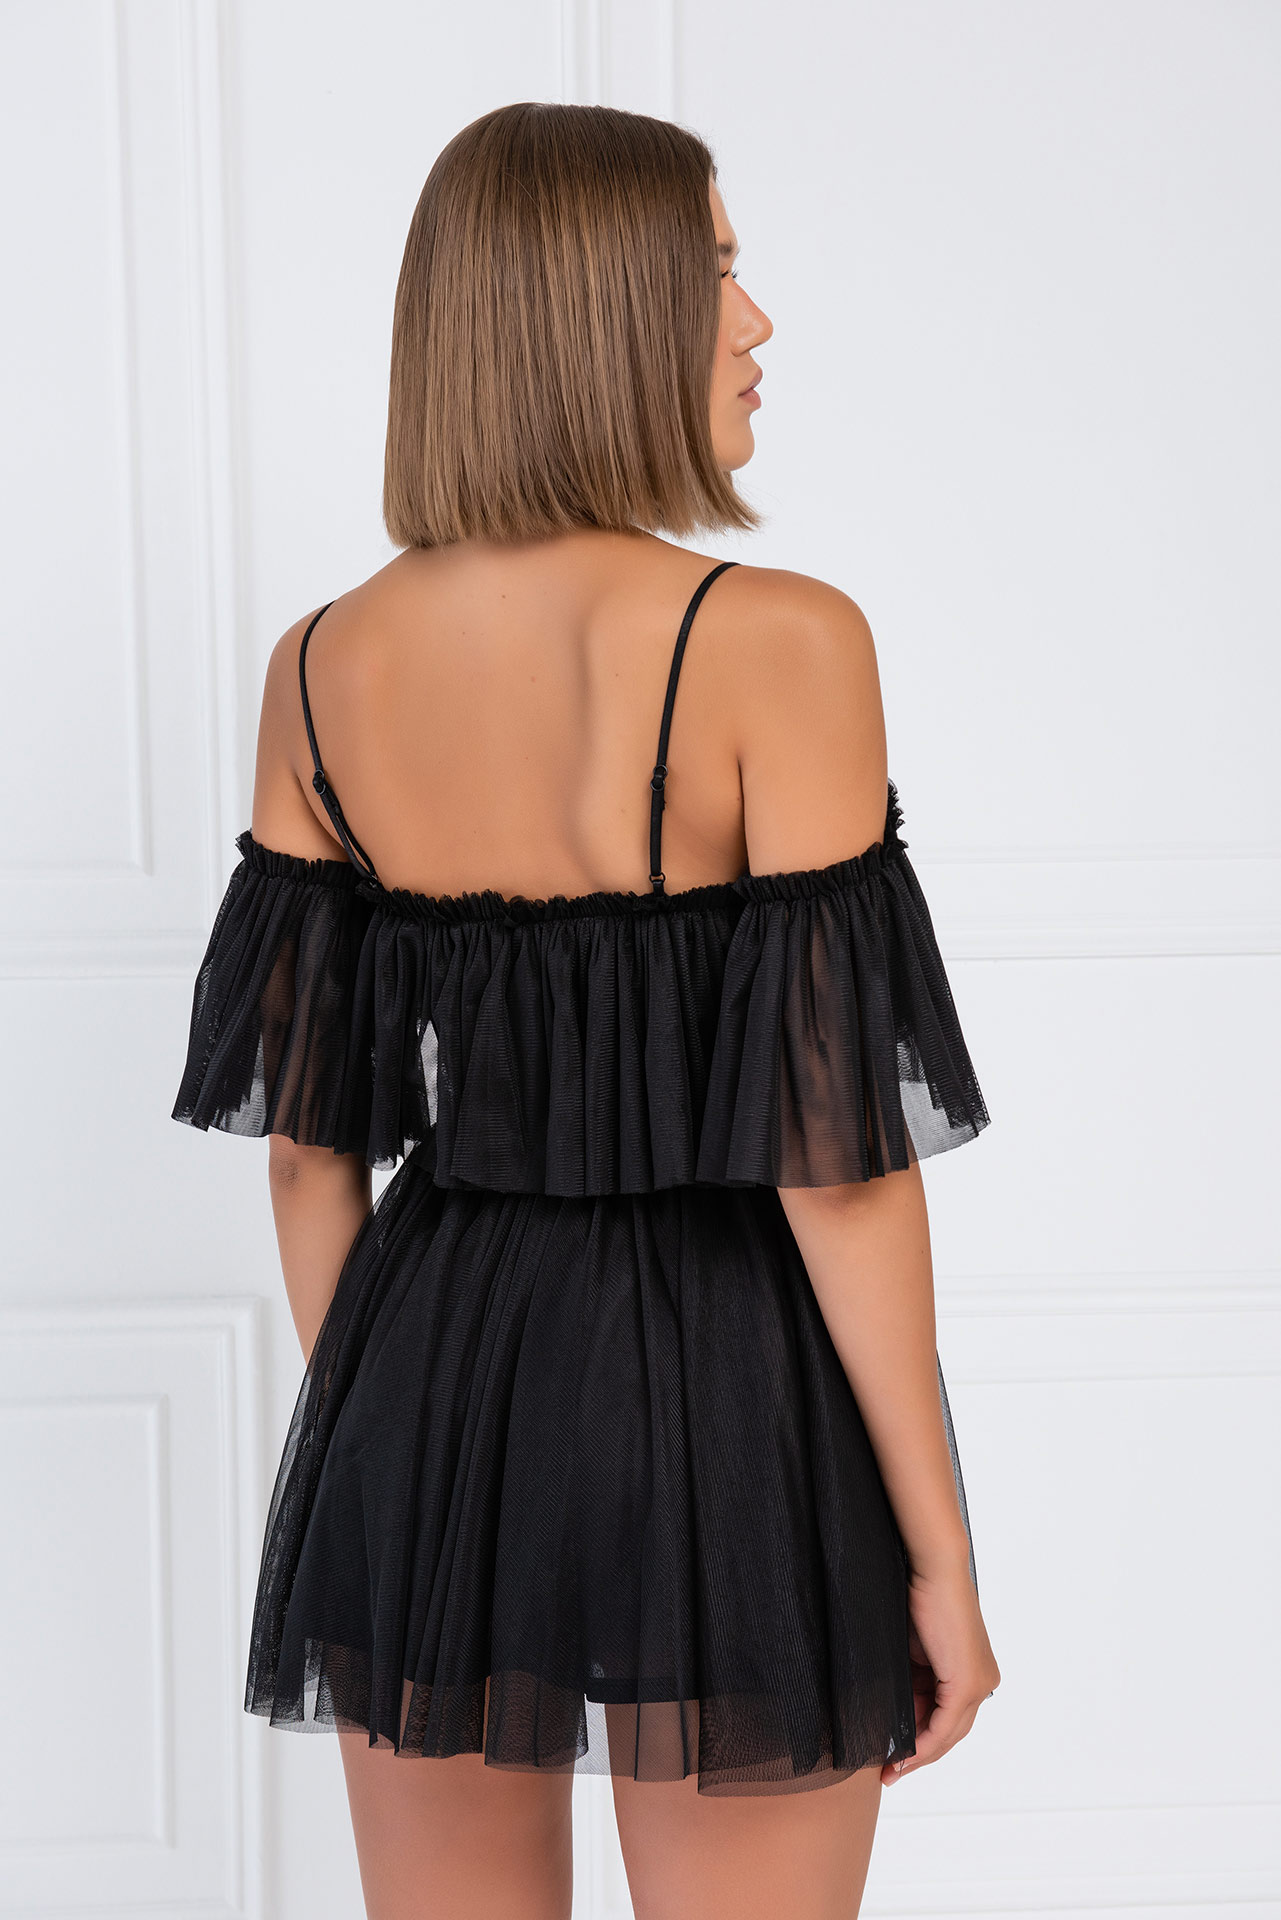 Wholesale Black Off-the-Shoulder Cami Tulle Dress